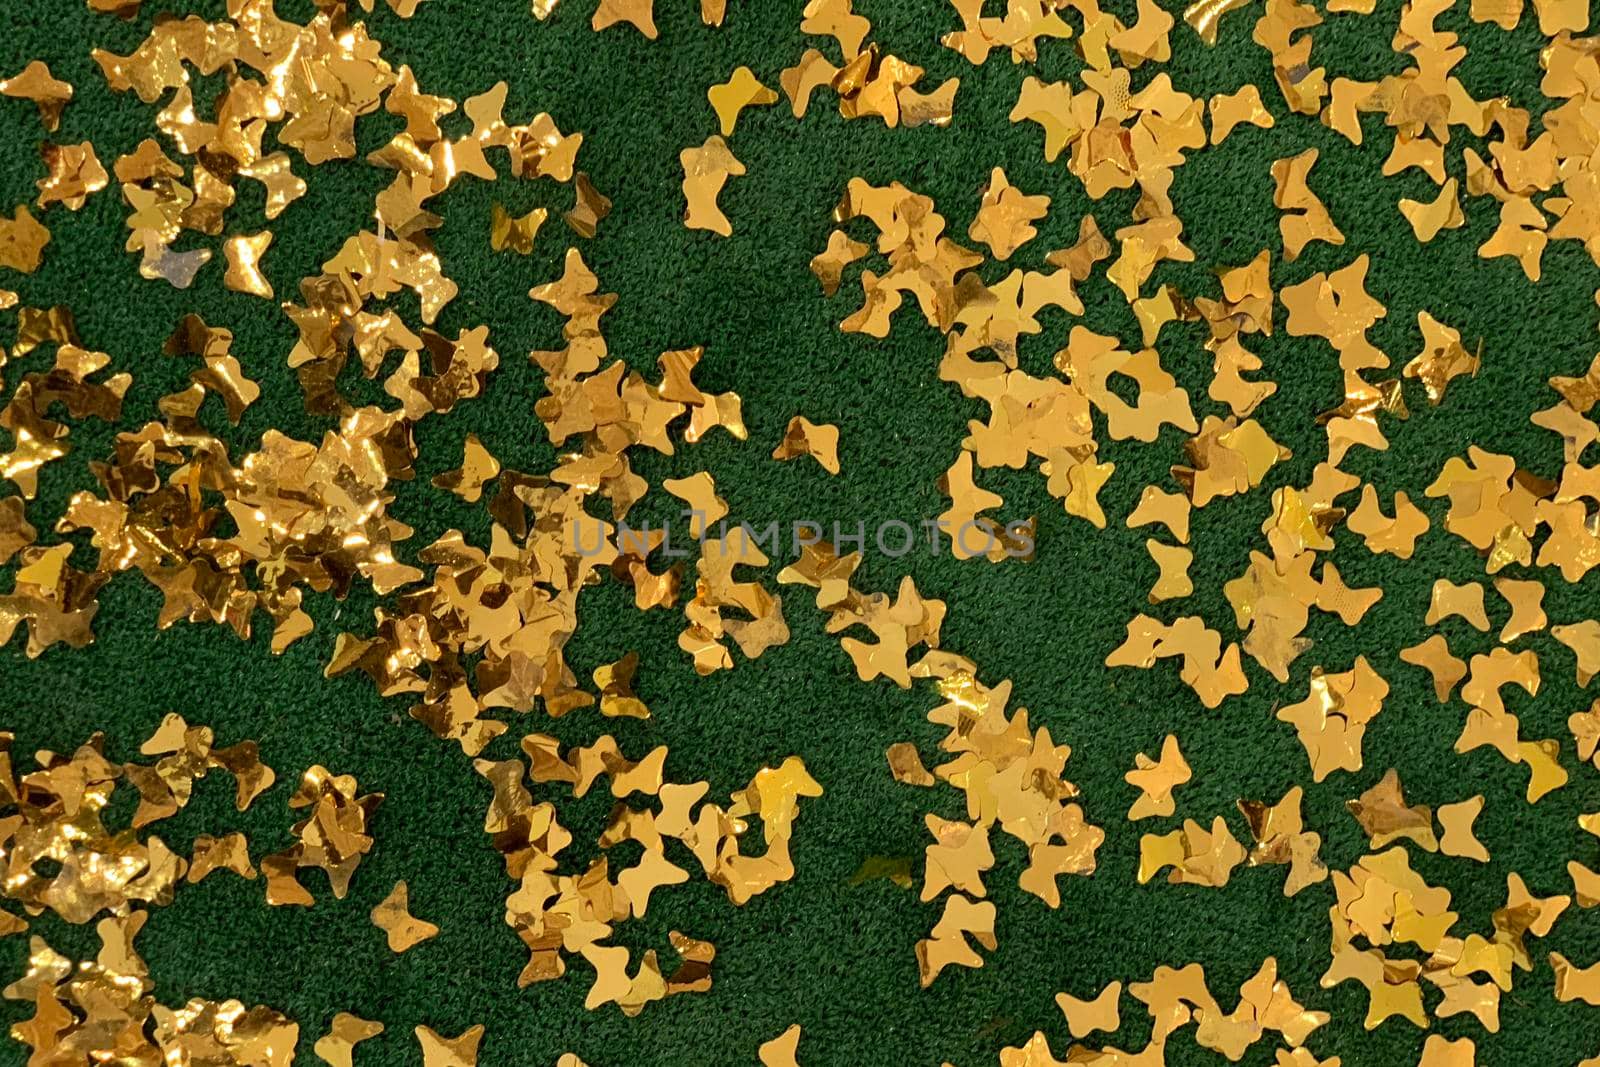 decorative shiny golden stars confetti on green background by Khosro1